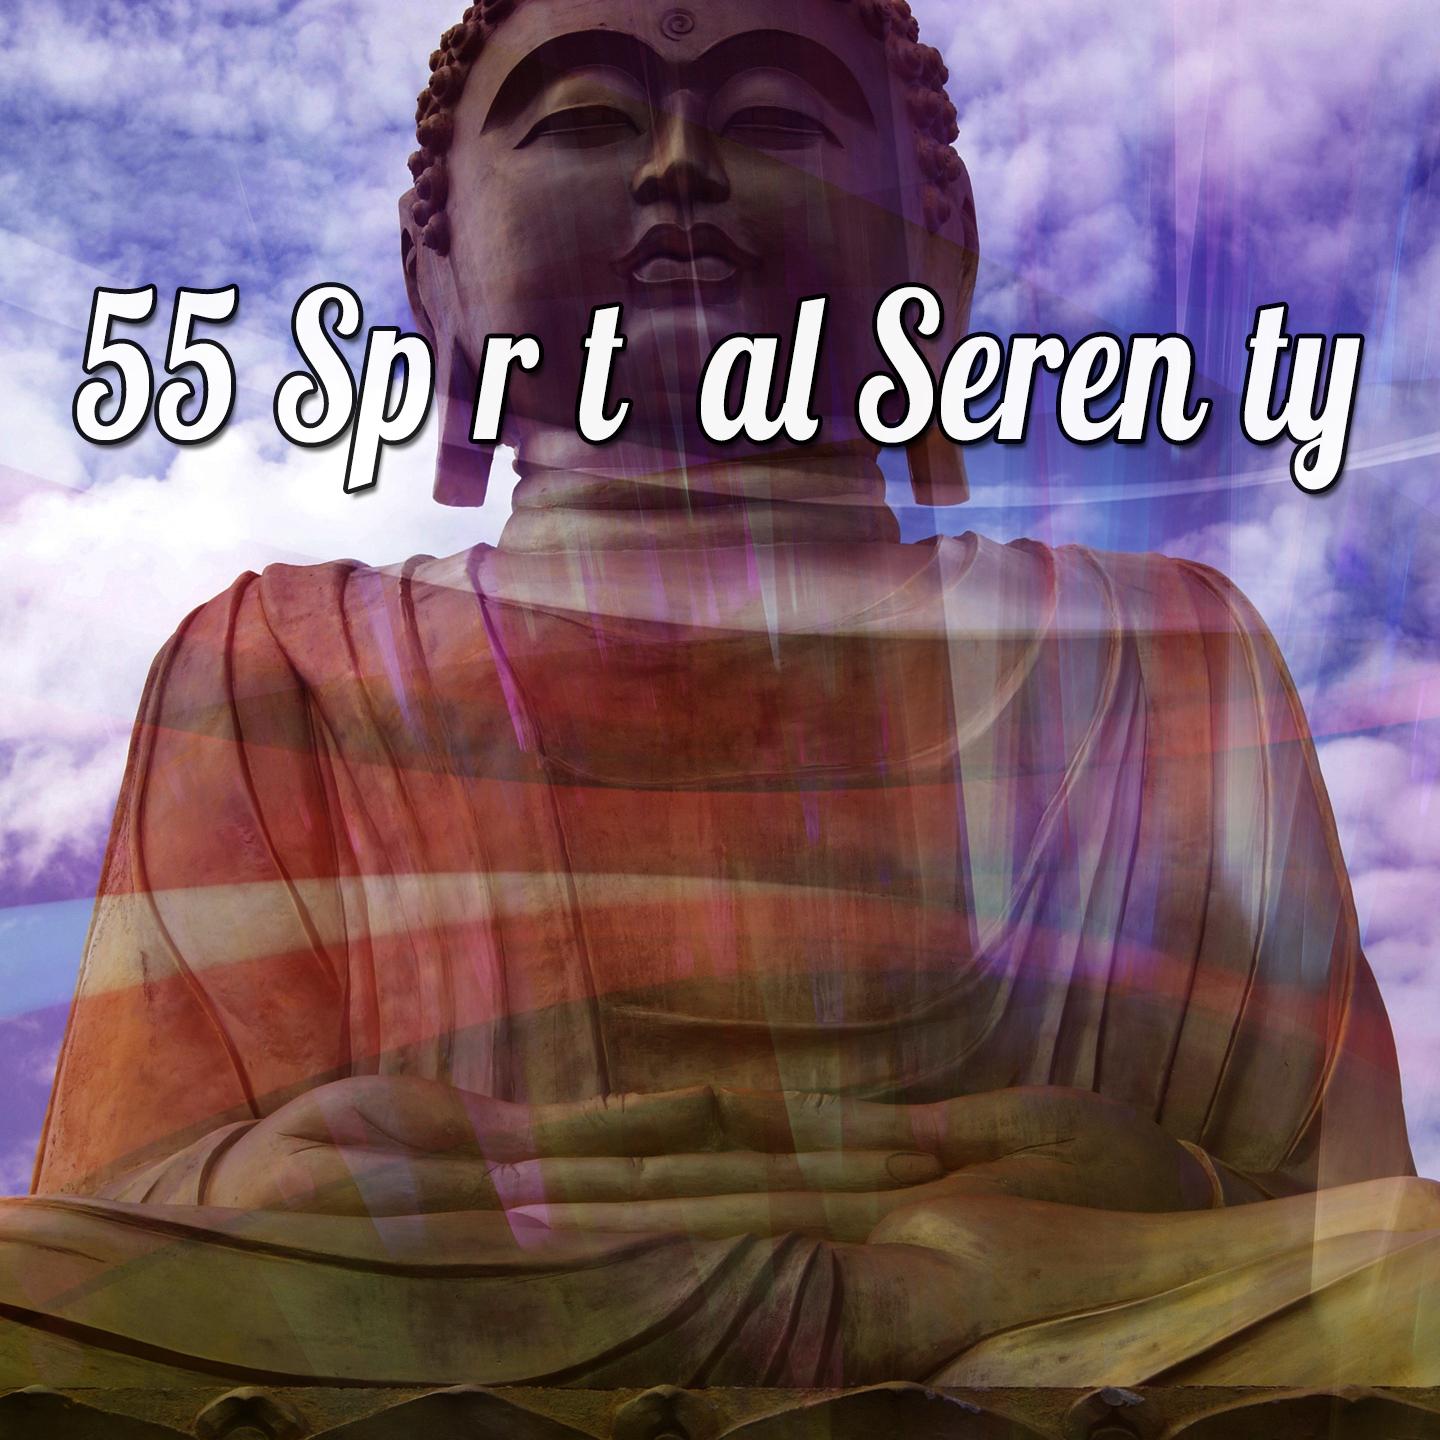 55 Spiritual Serenity